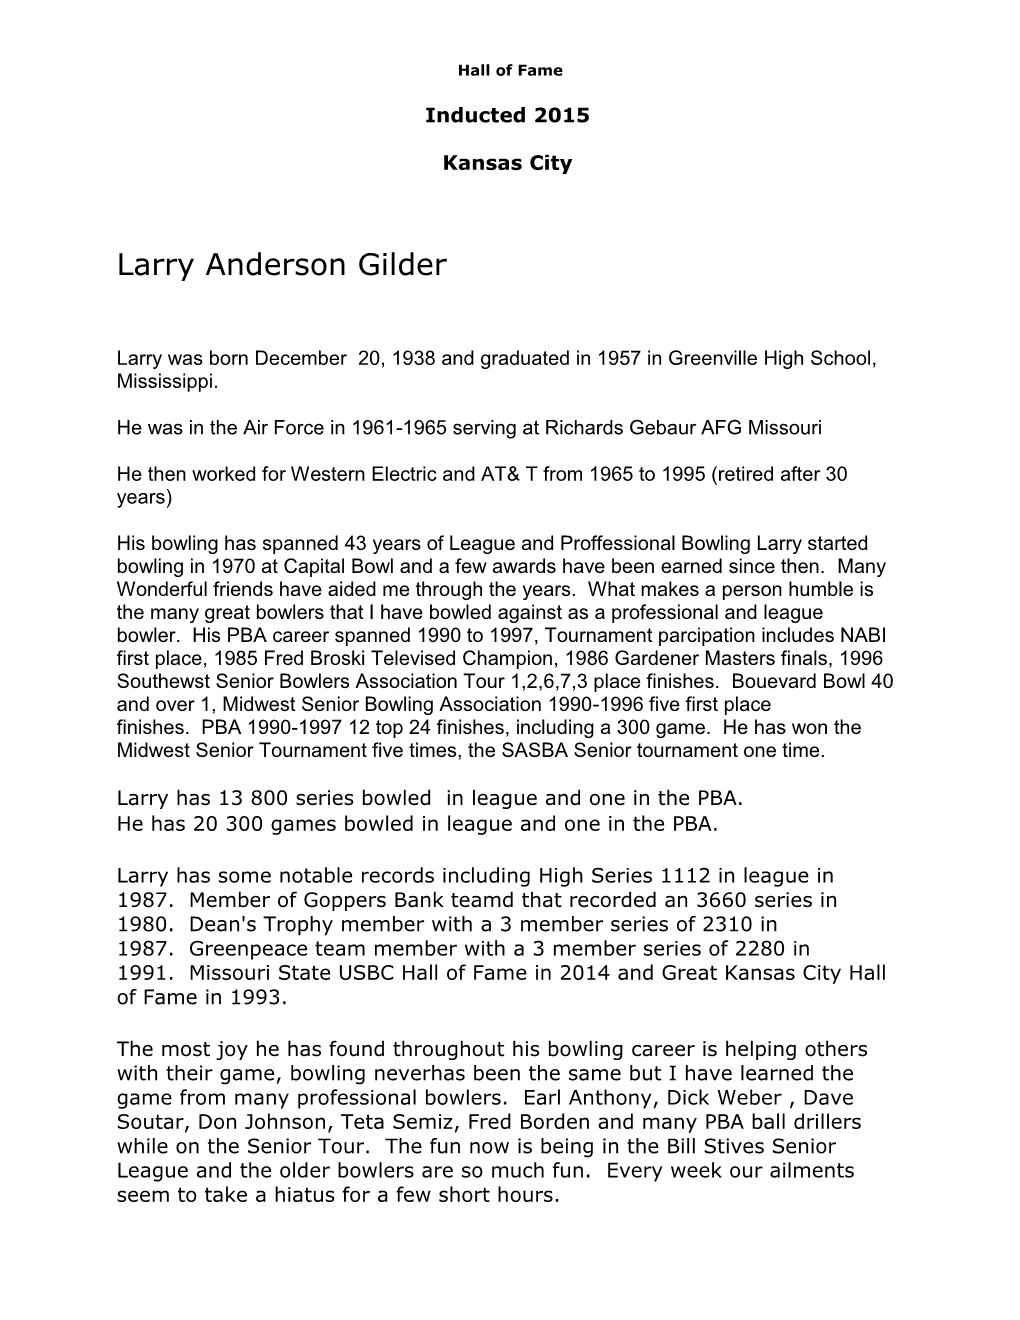 Larry Anderson Gilder